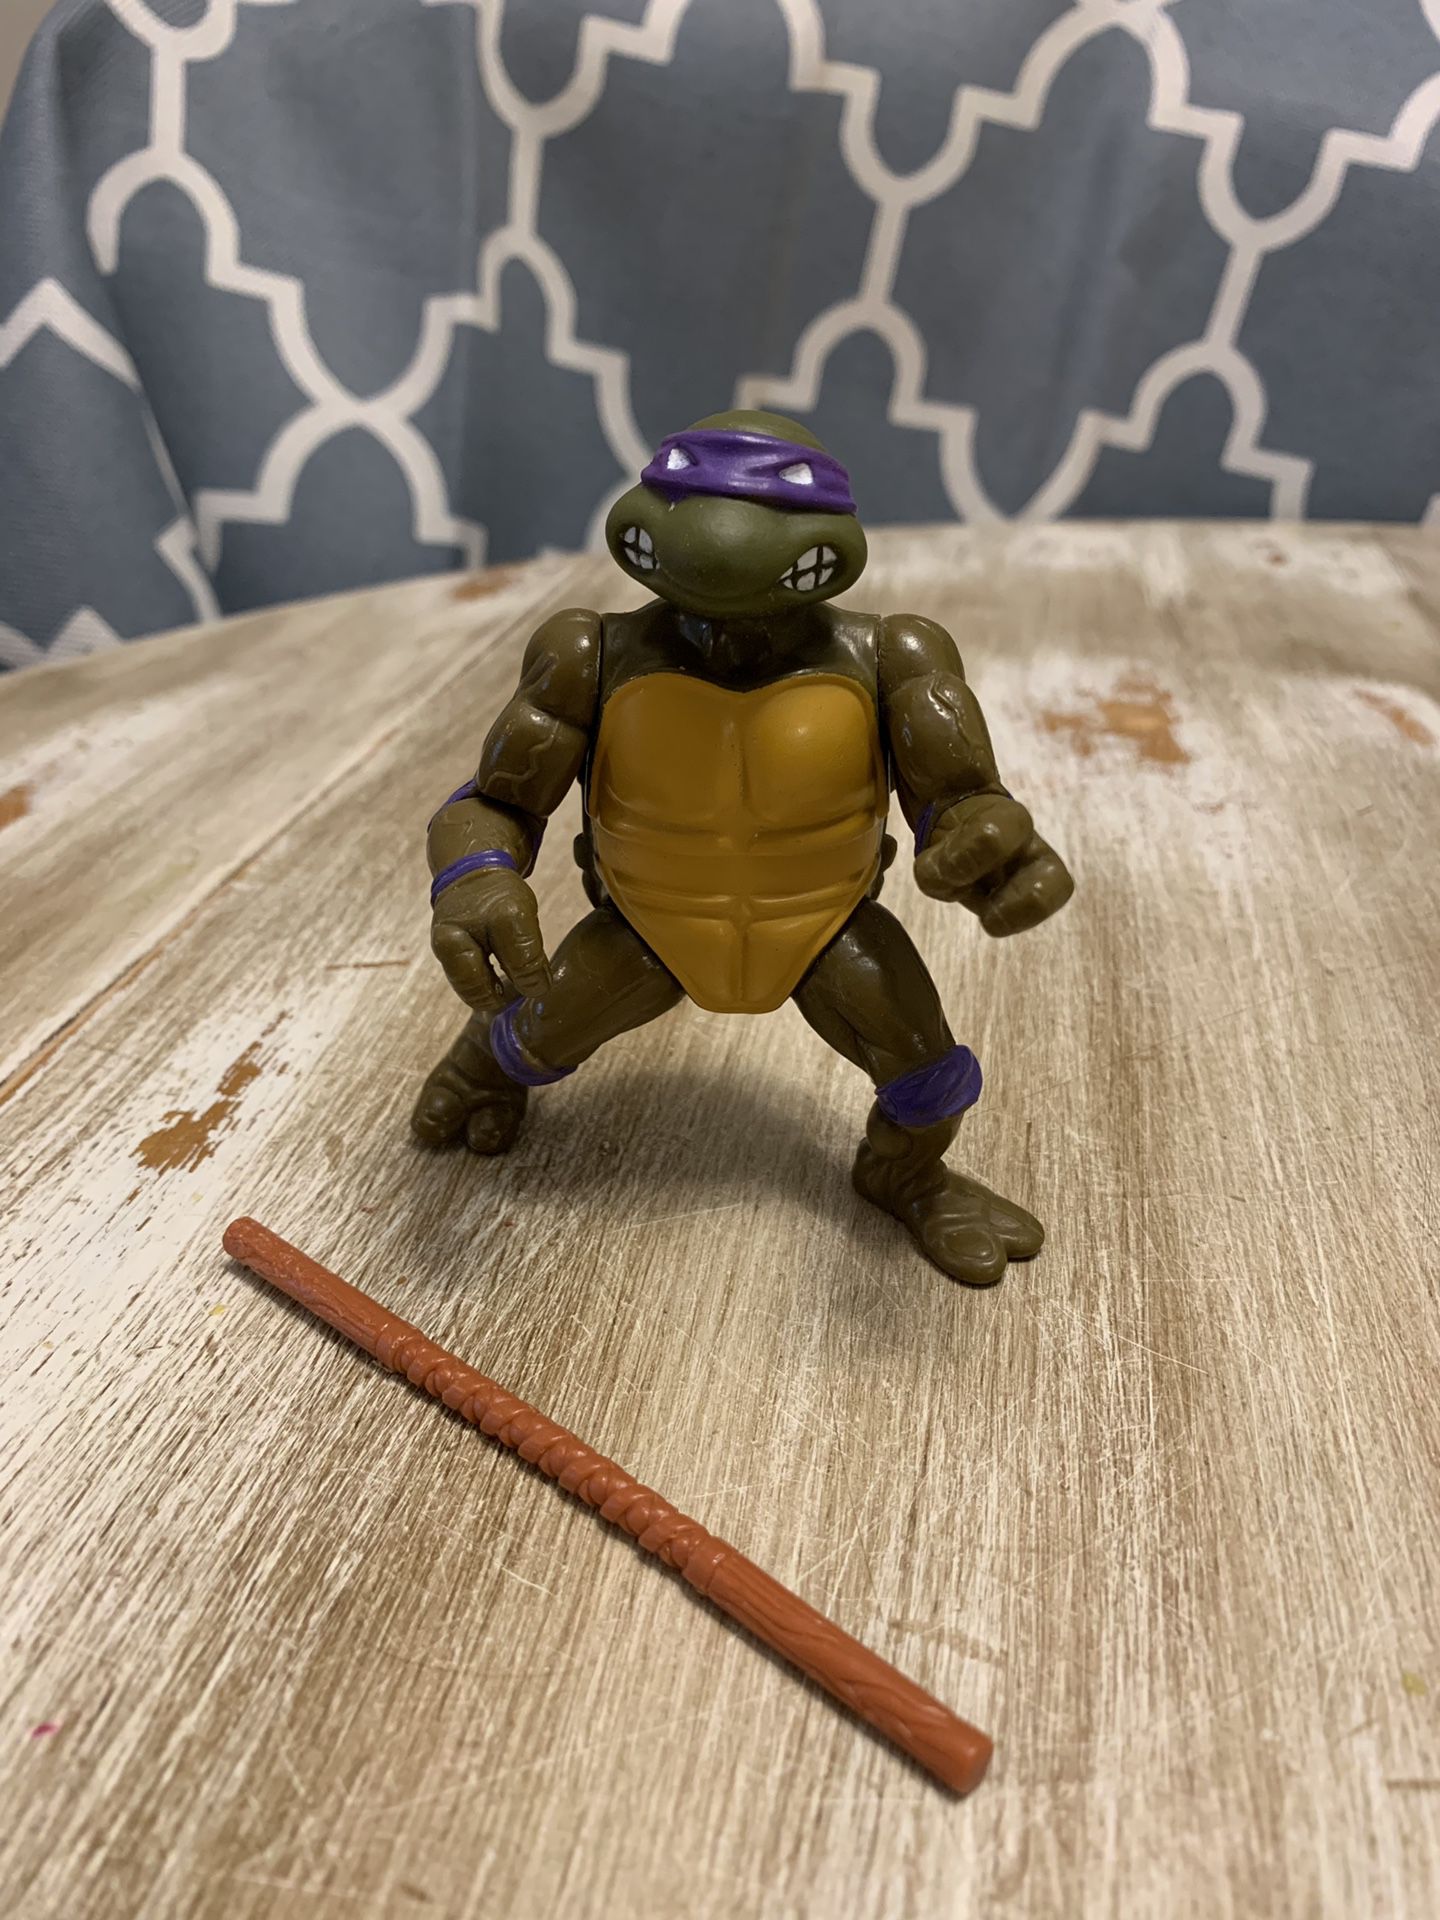 Donatello TMNT action figure